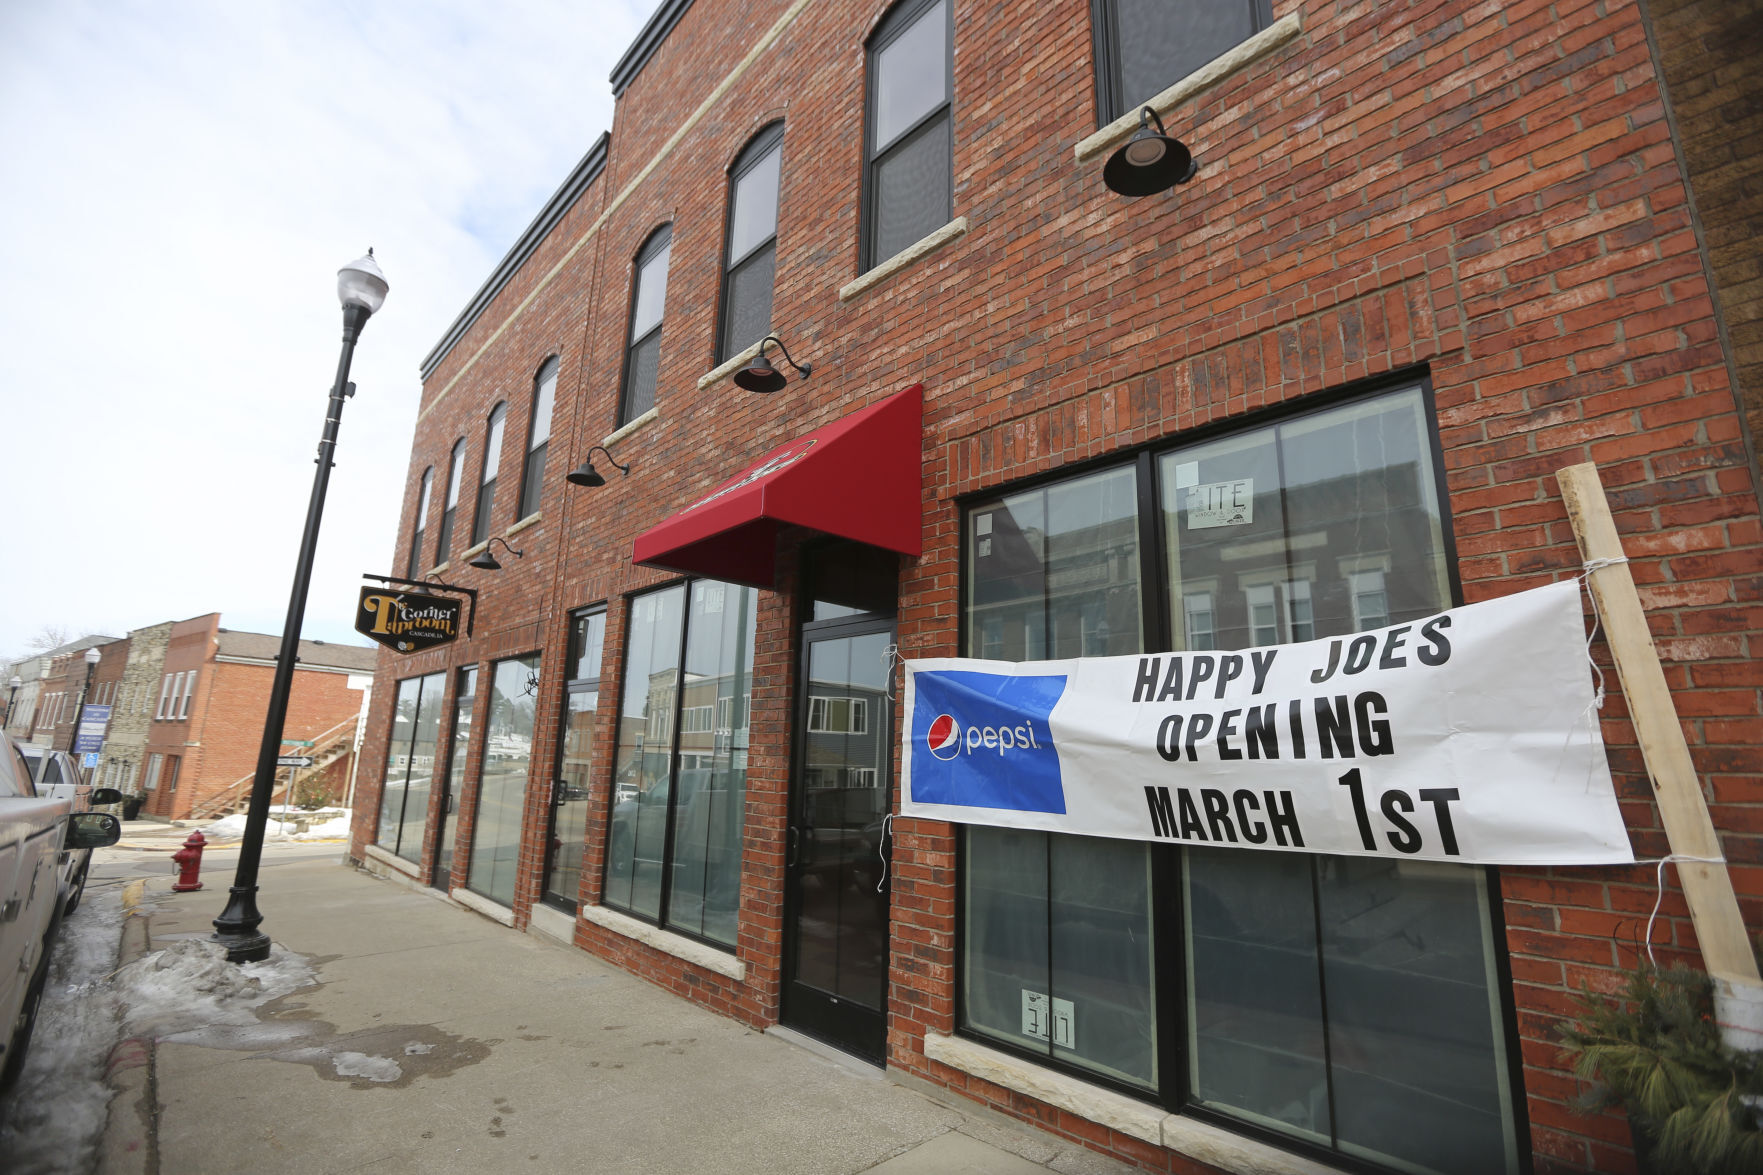 Happy Joe’s Pizza and Ice Cream will open Monday in Cascade, Iowa. PHOTO CREDIT: Dave Kettering